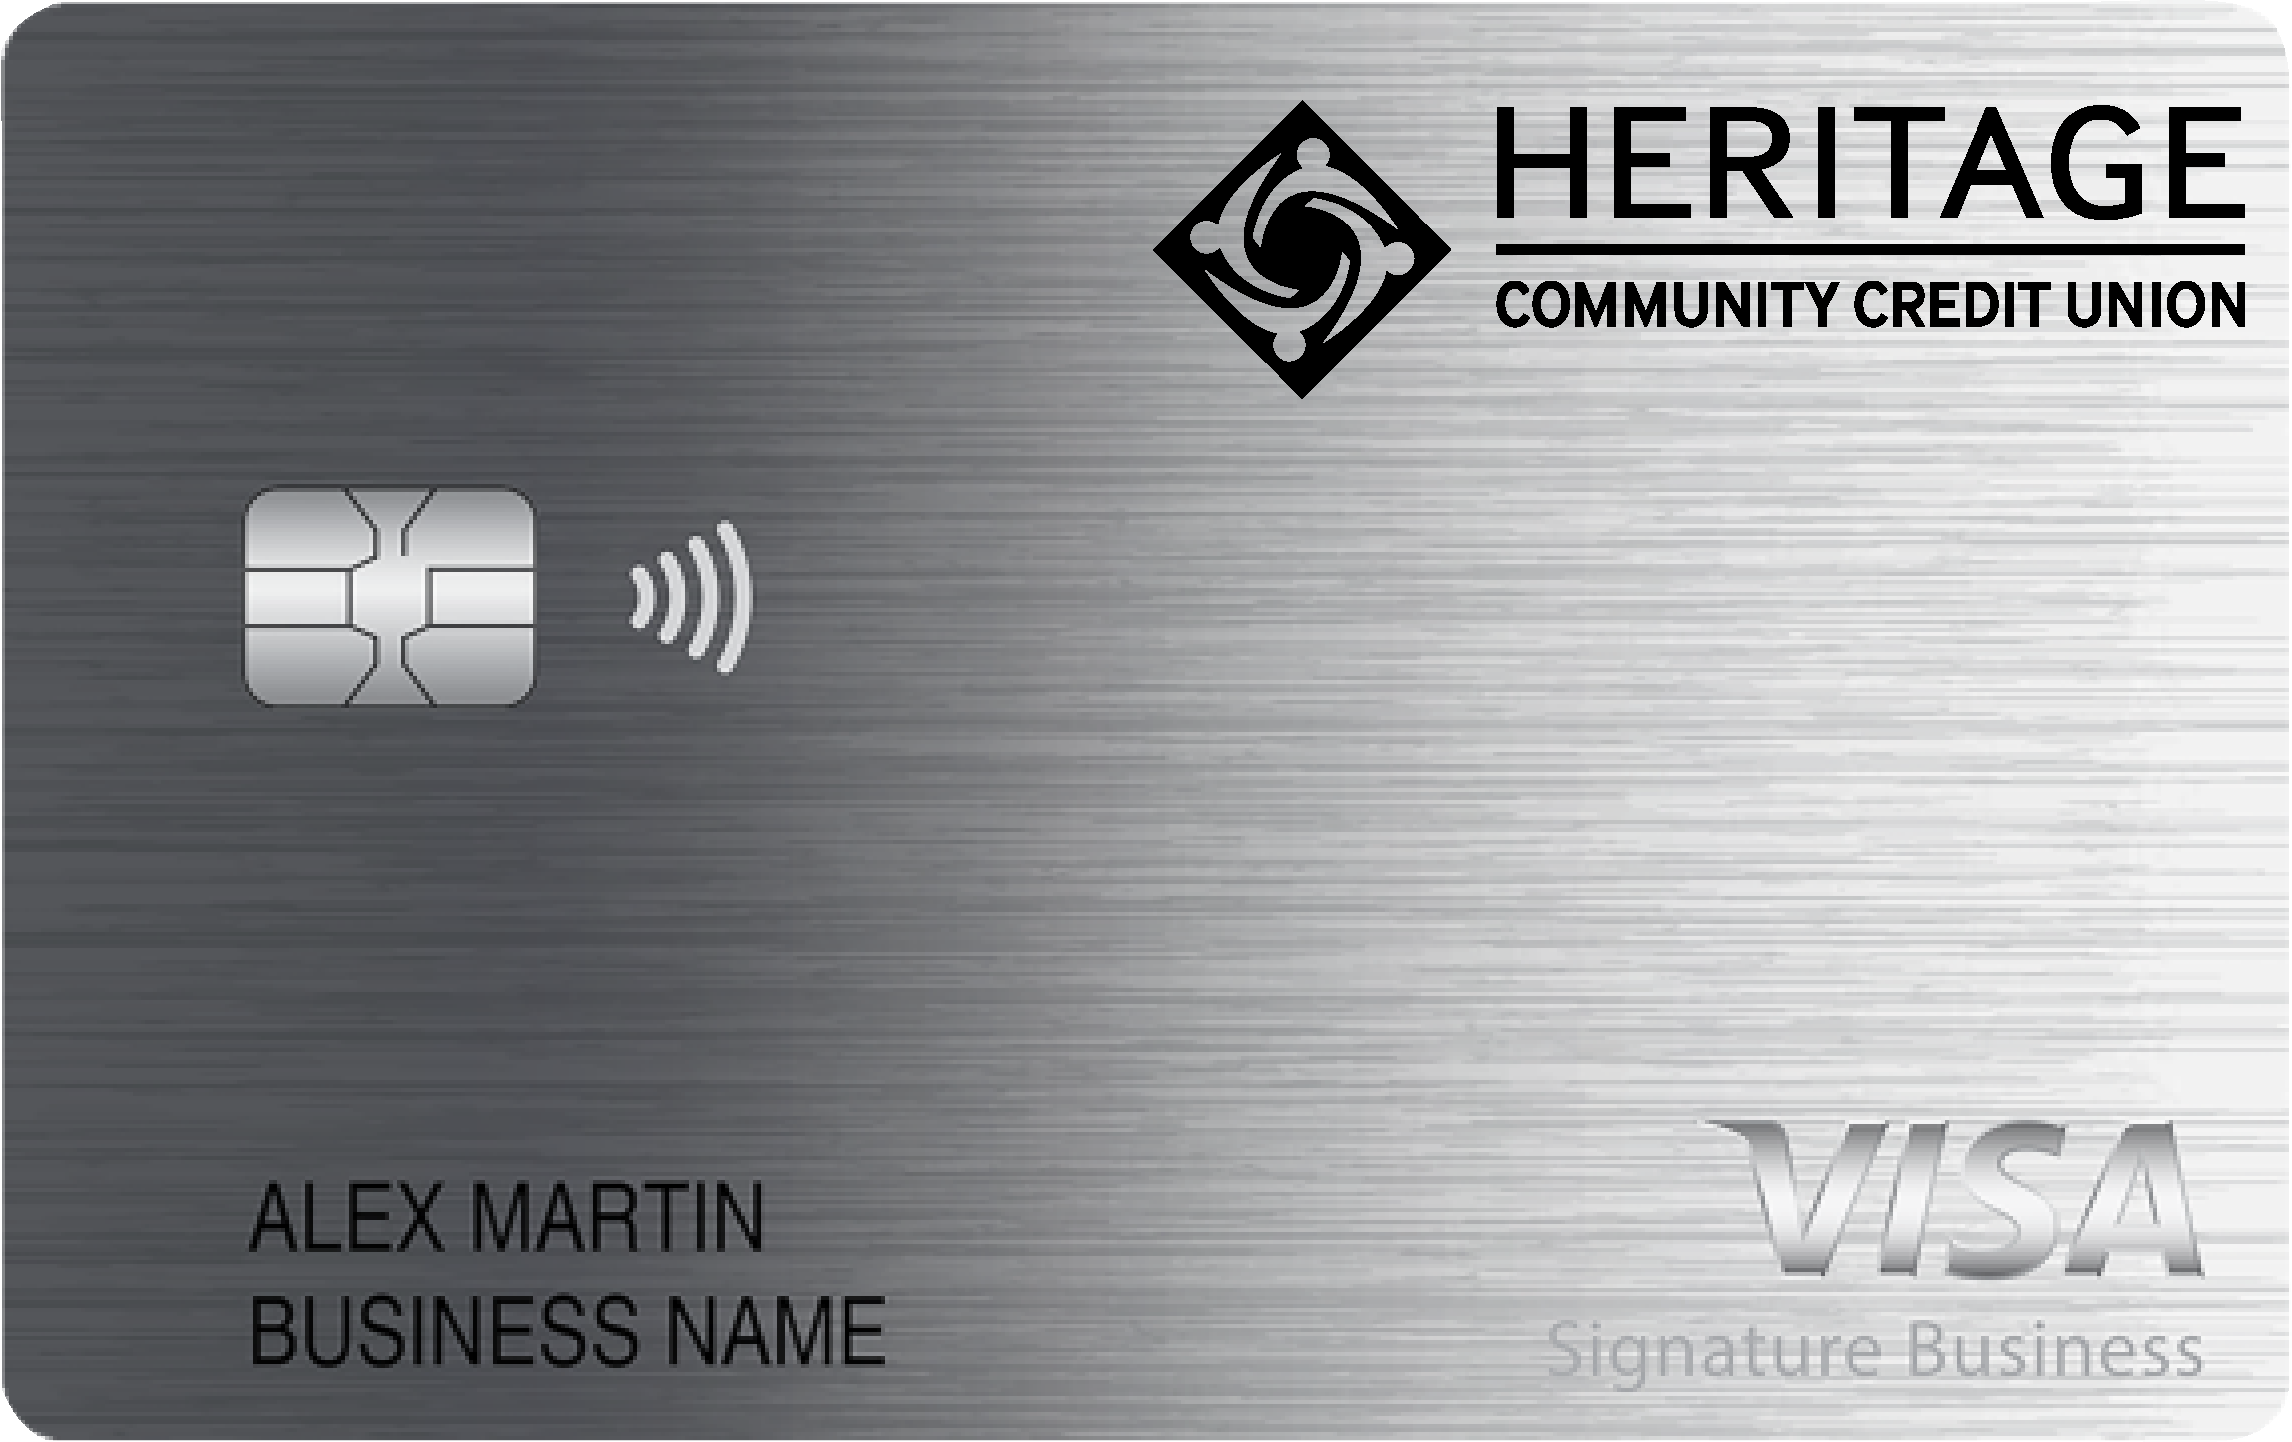 Heritage Community Credit Union Smart Business Rewards Card